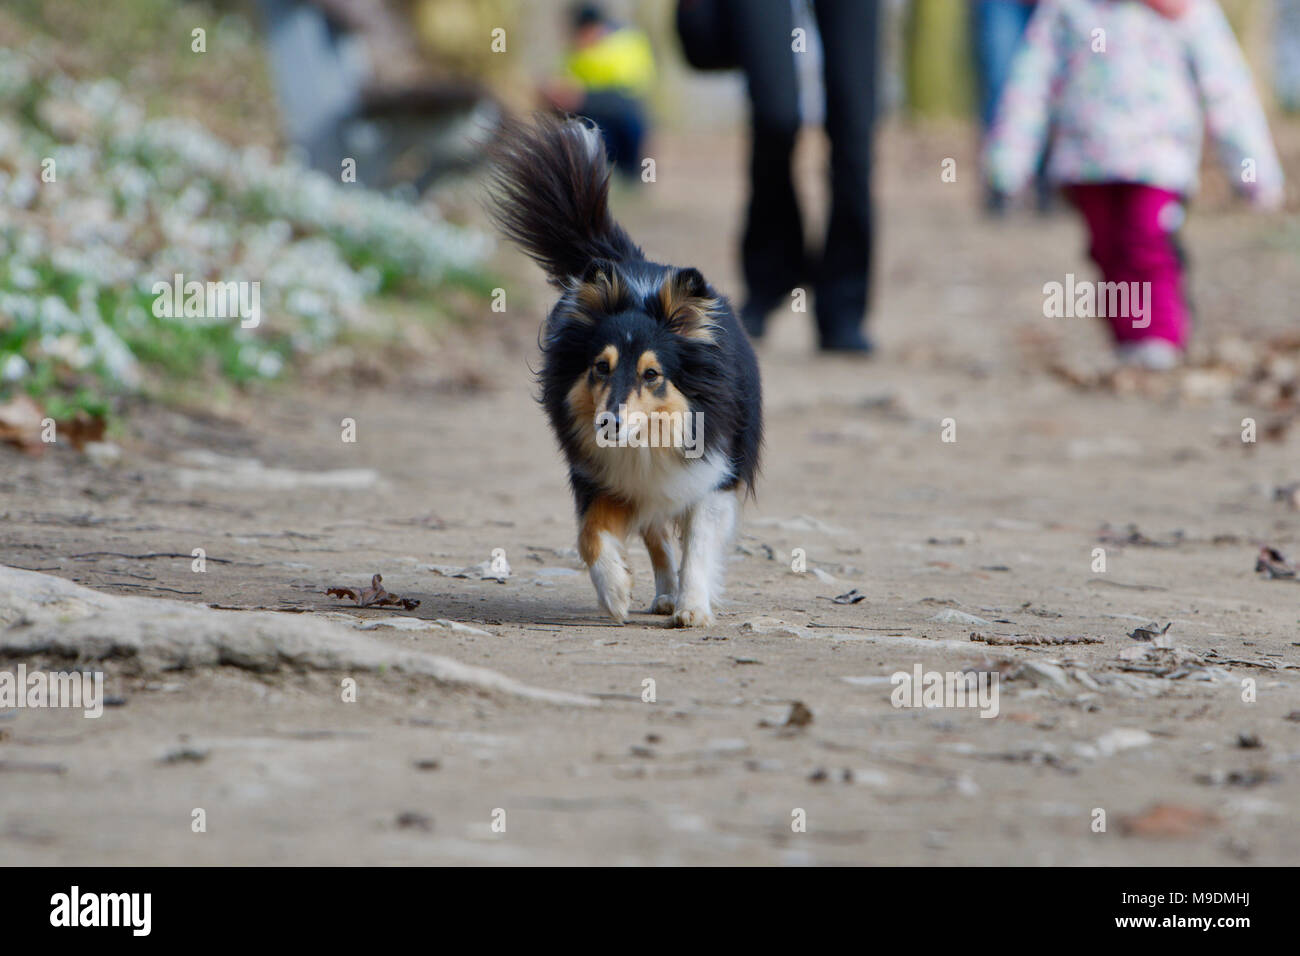 Tricolor shetland sheepdog walking on the dusty road Stock Photo